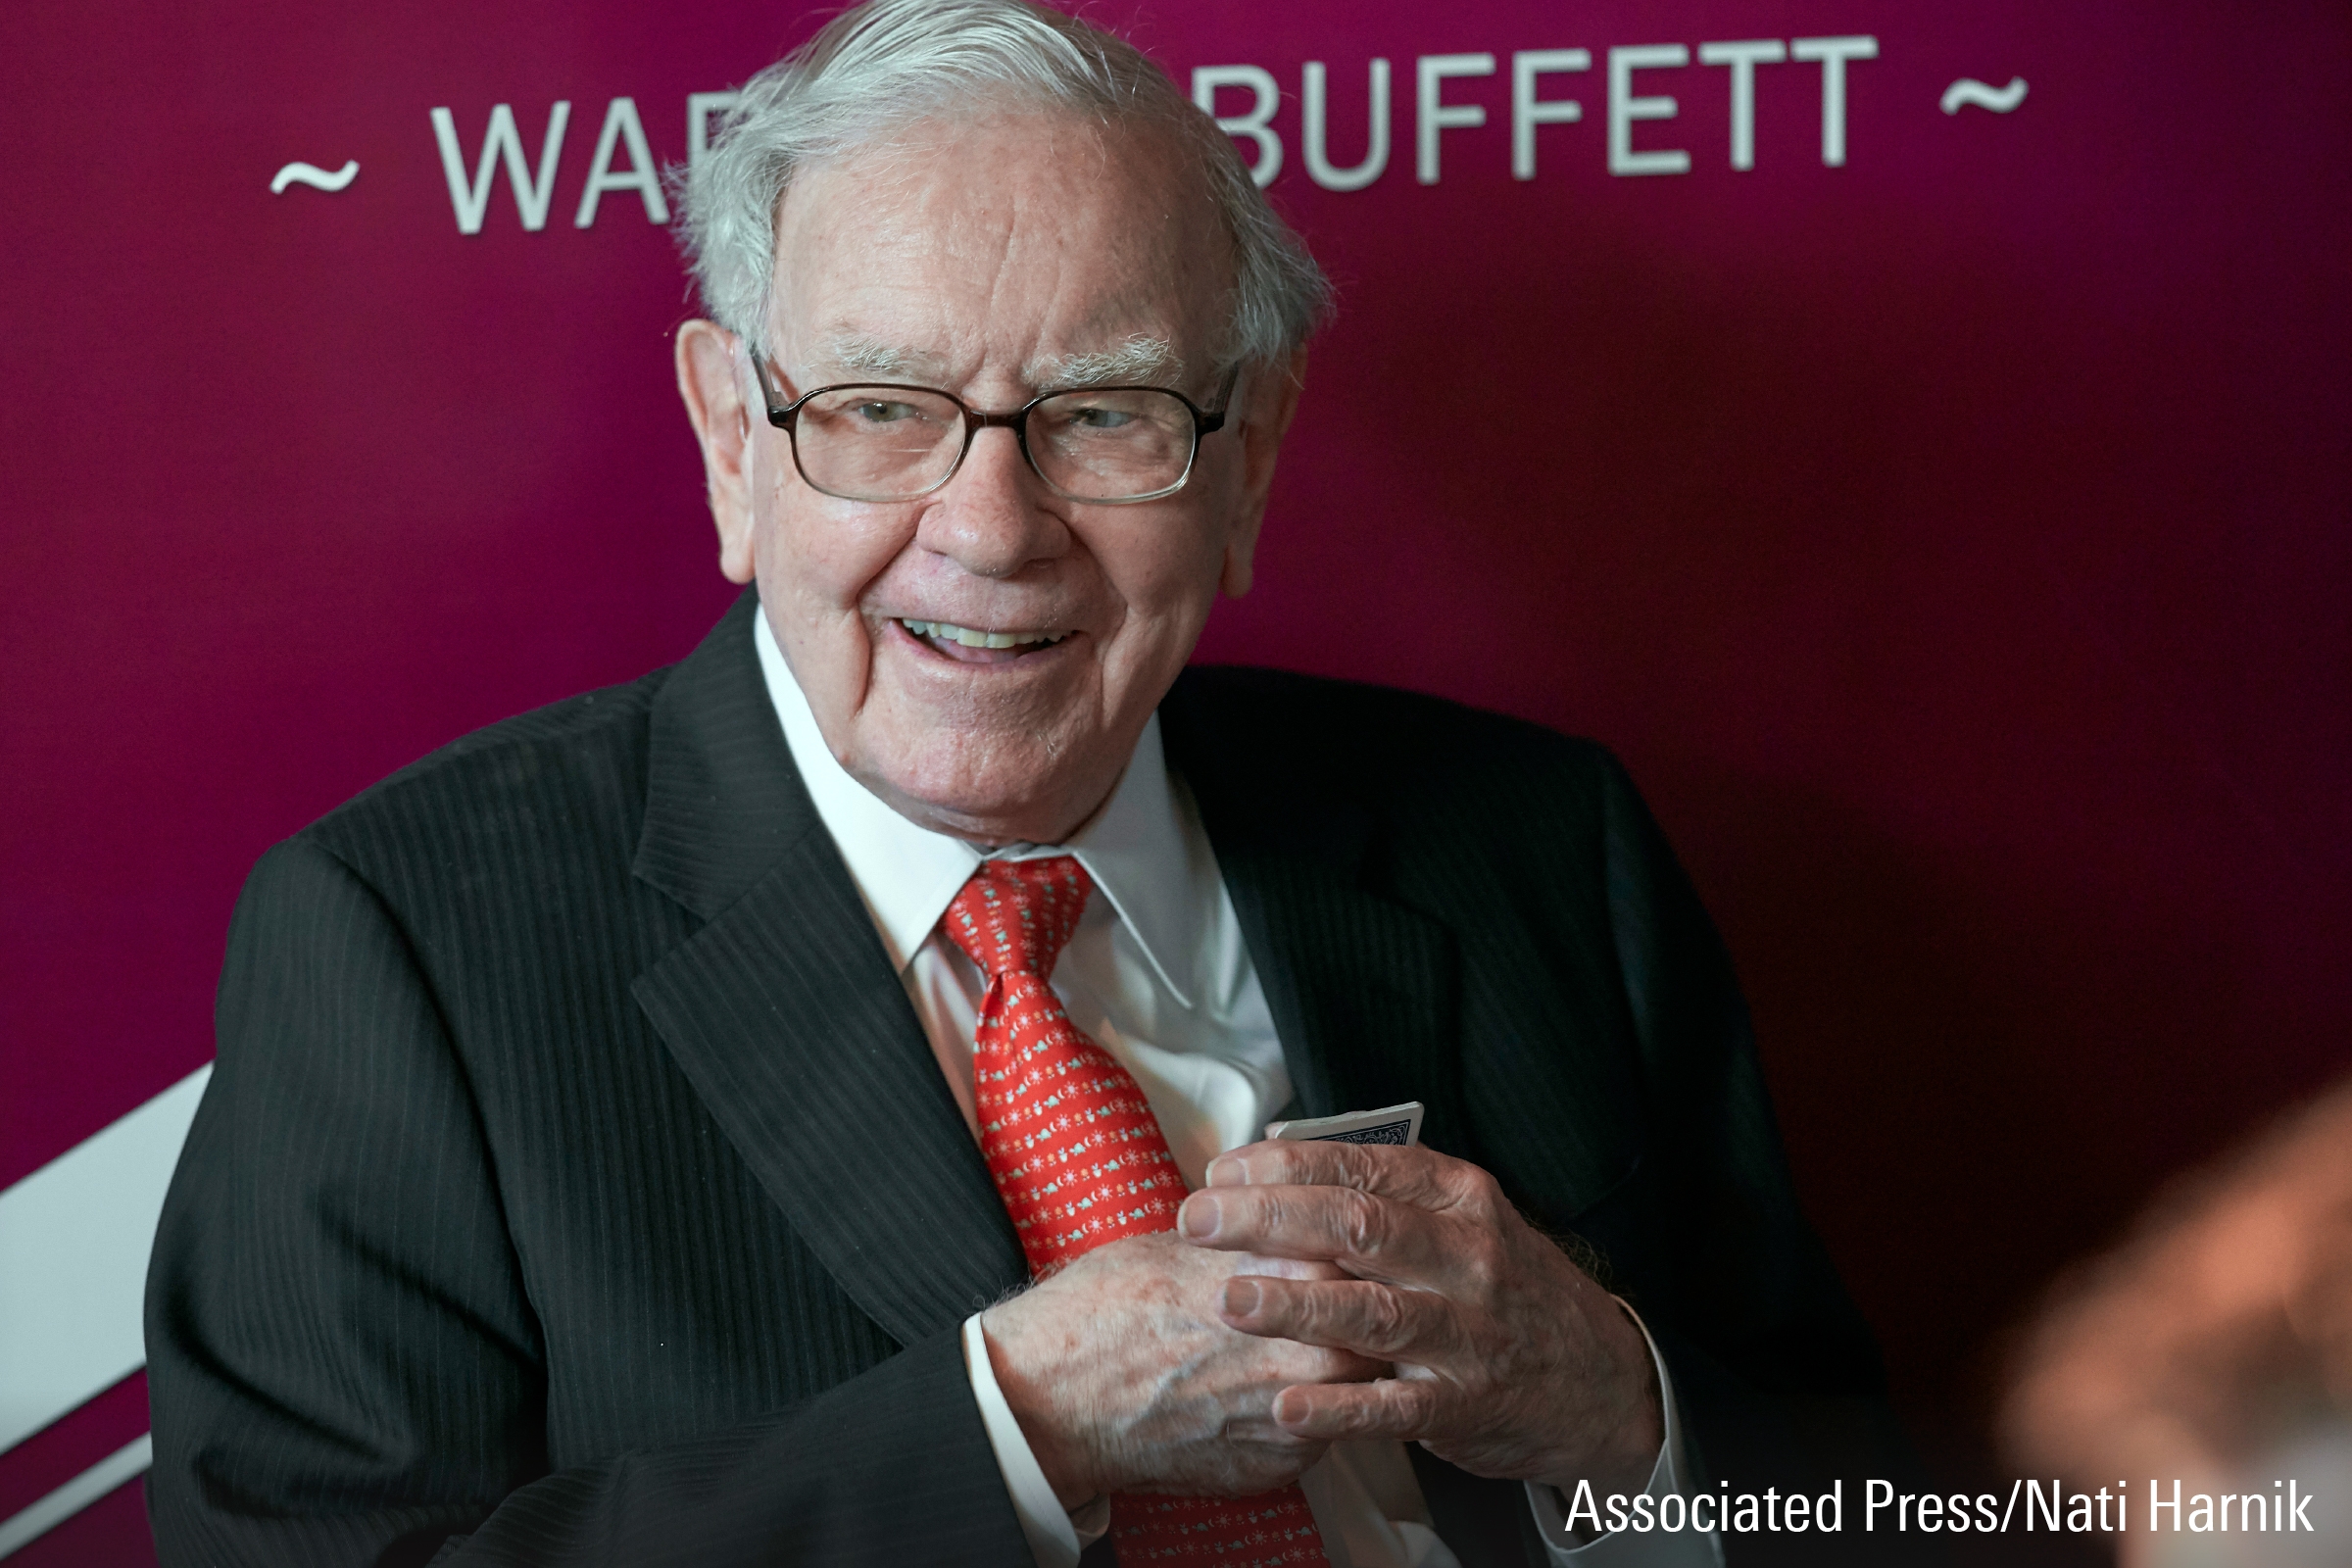 4 Warren Buffett Stocks to Buy After Berkshire Hathaway’s Latest 13F Filing